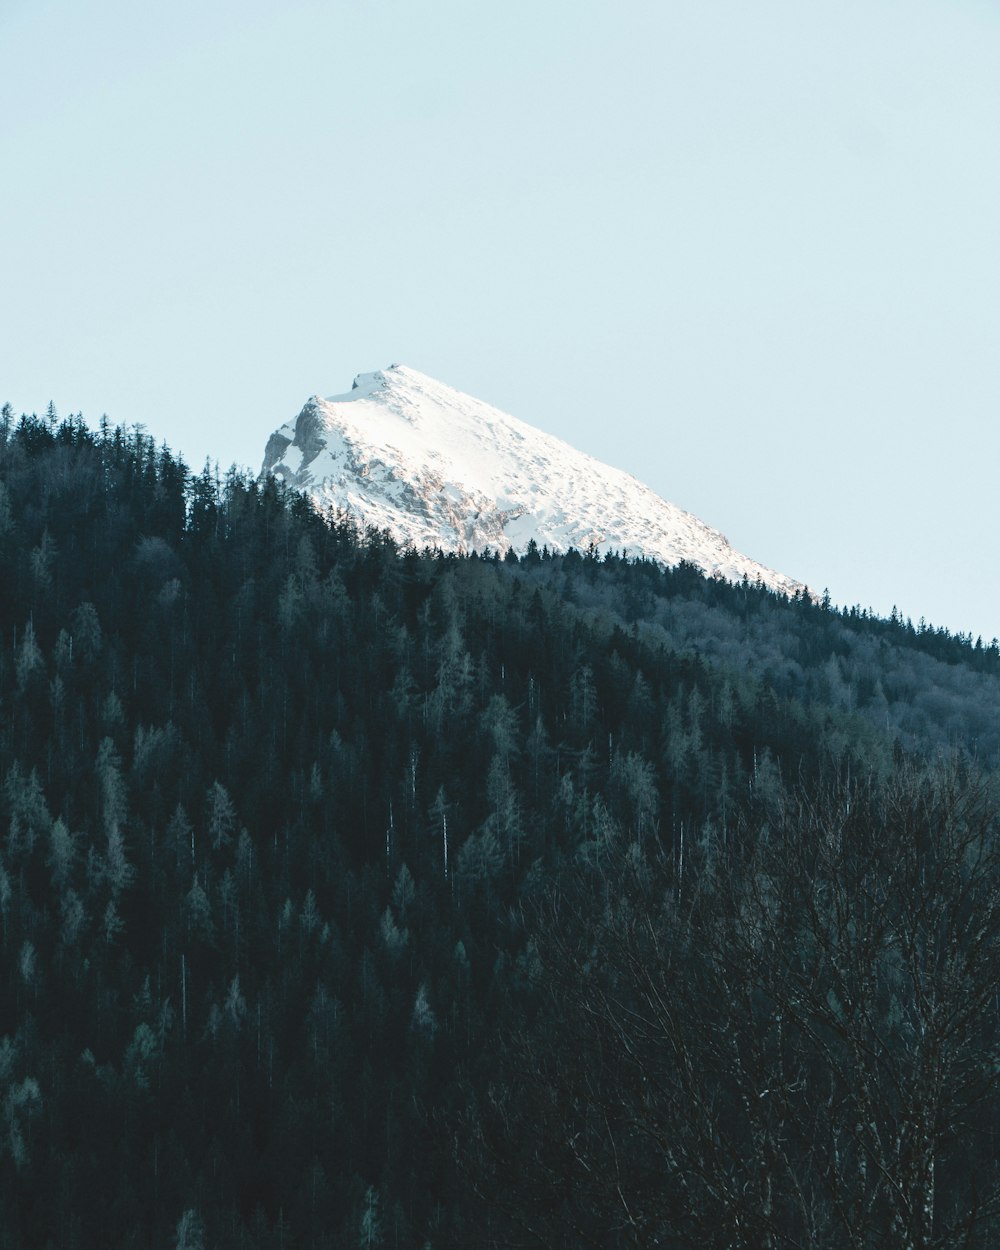 white snow capped mountain peak across green pine forest